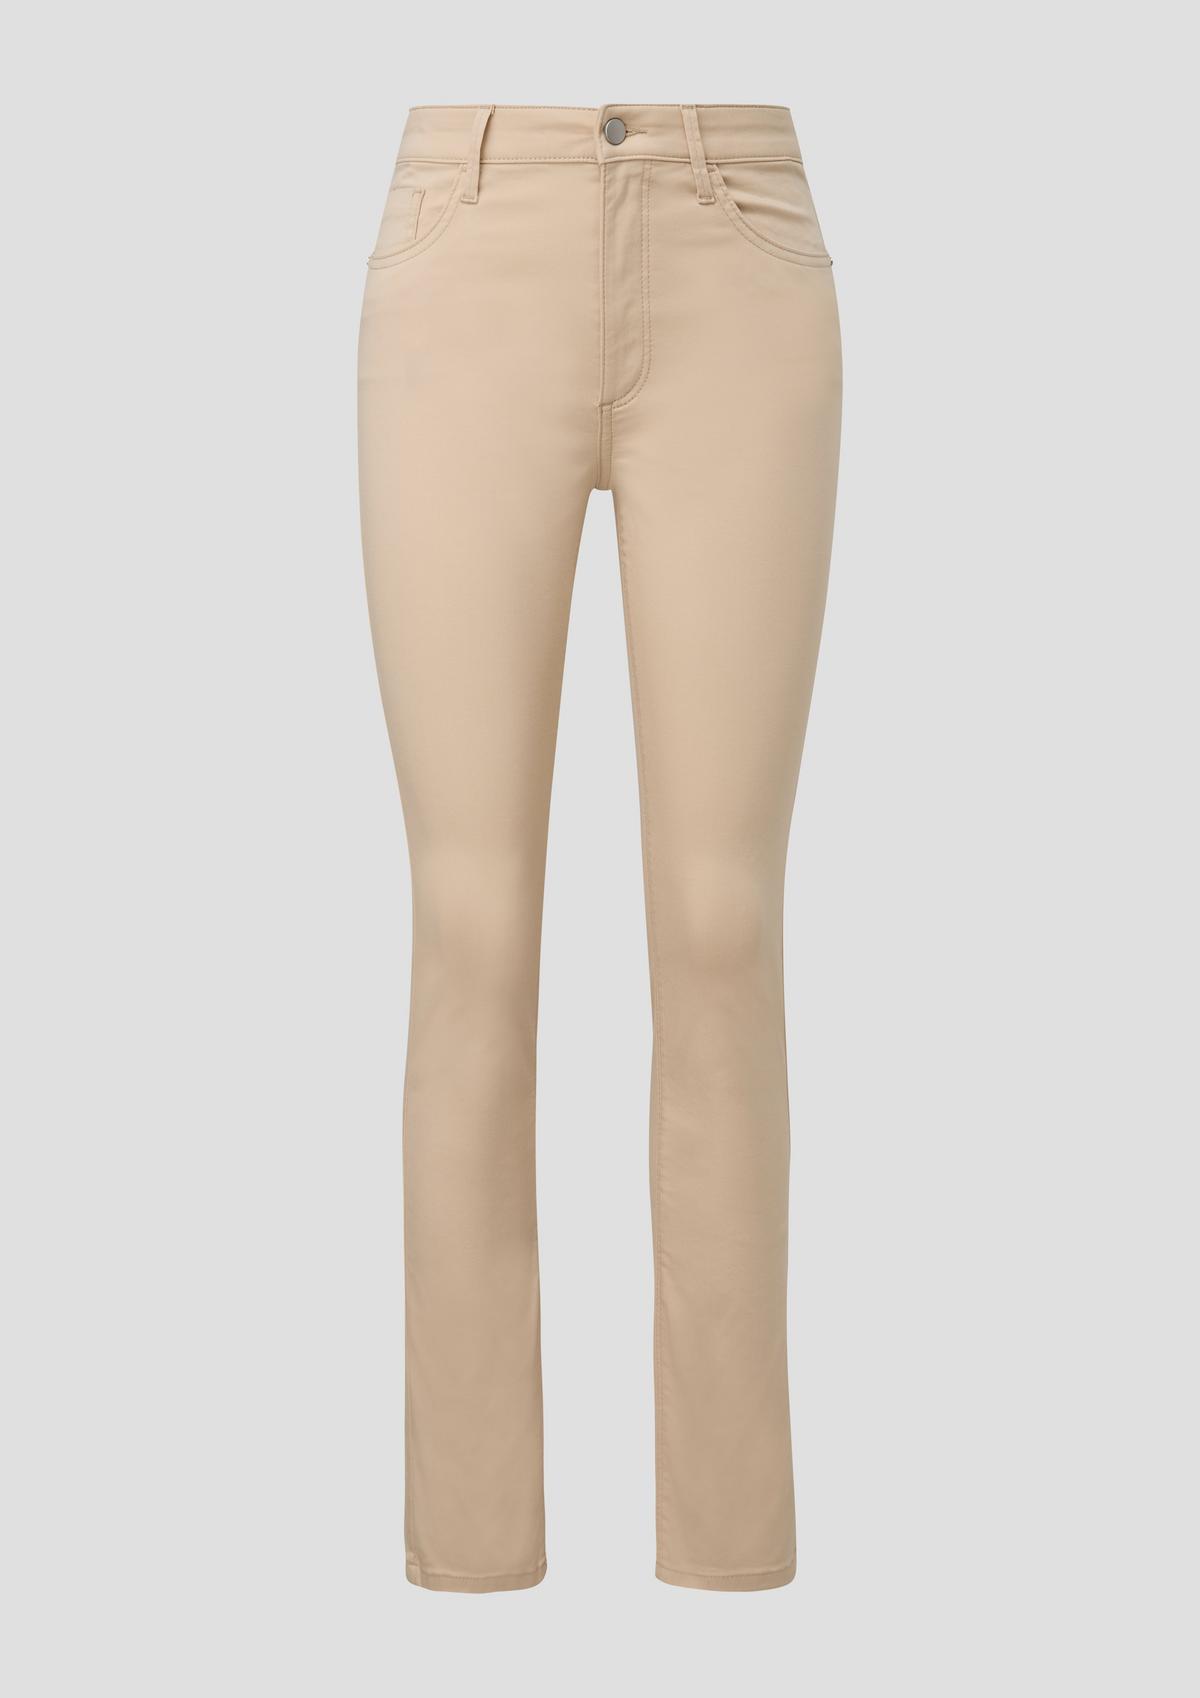 s.Oliver Betsy jeans / slim fit / high rise / slim leg